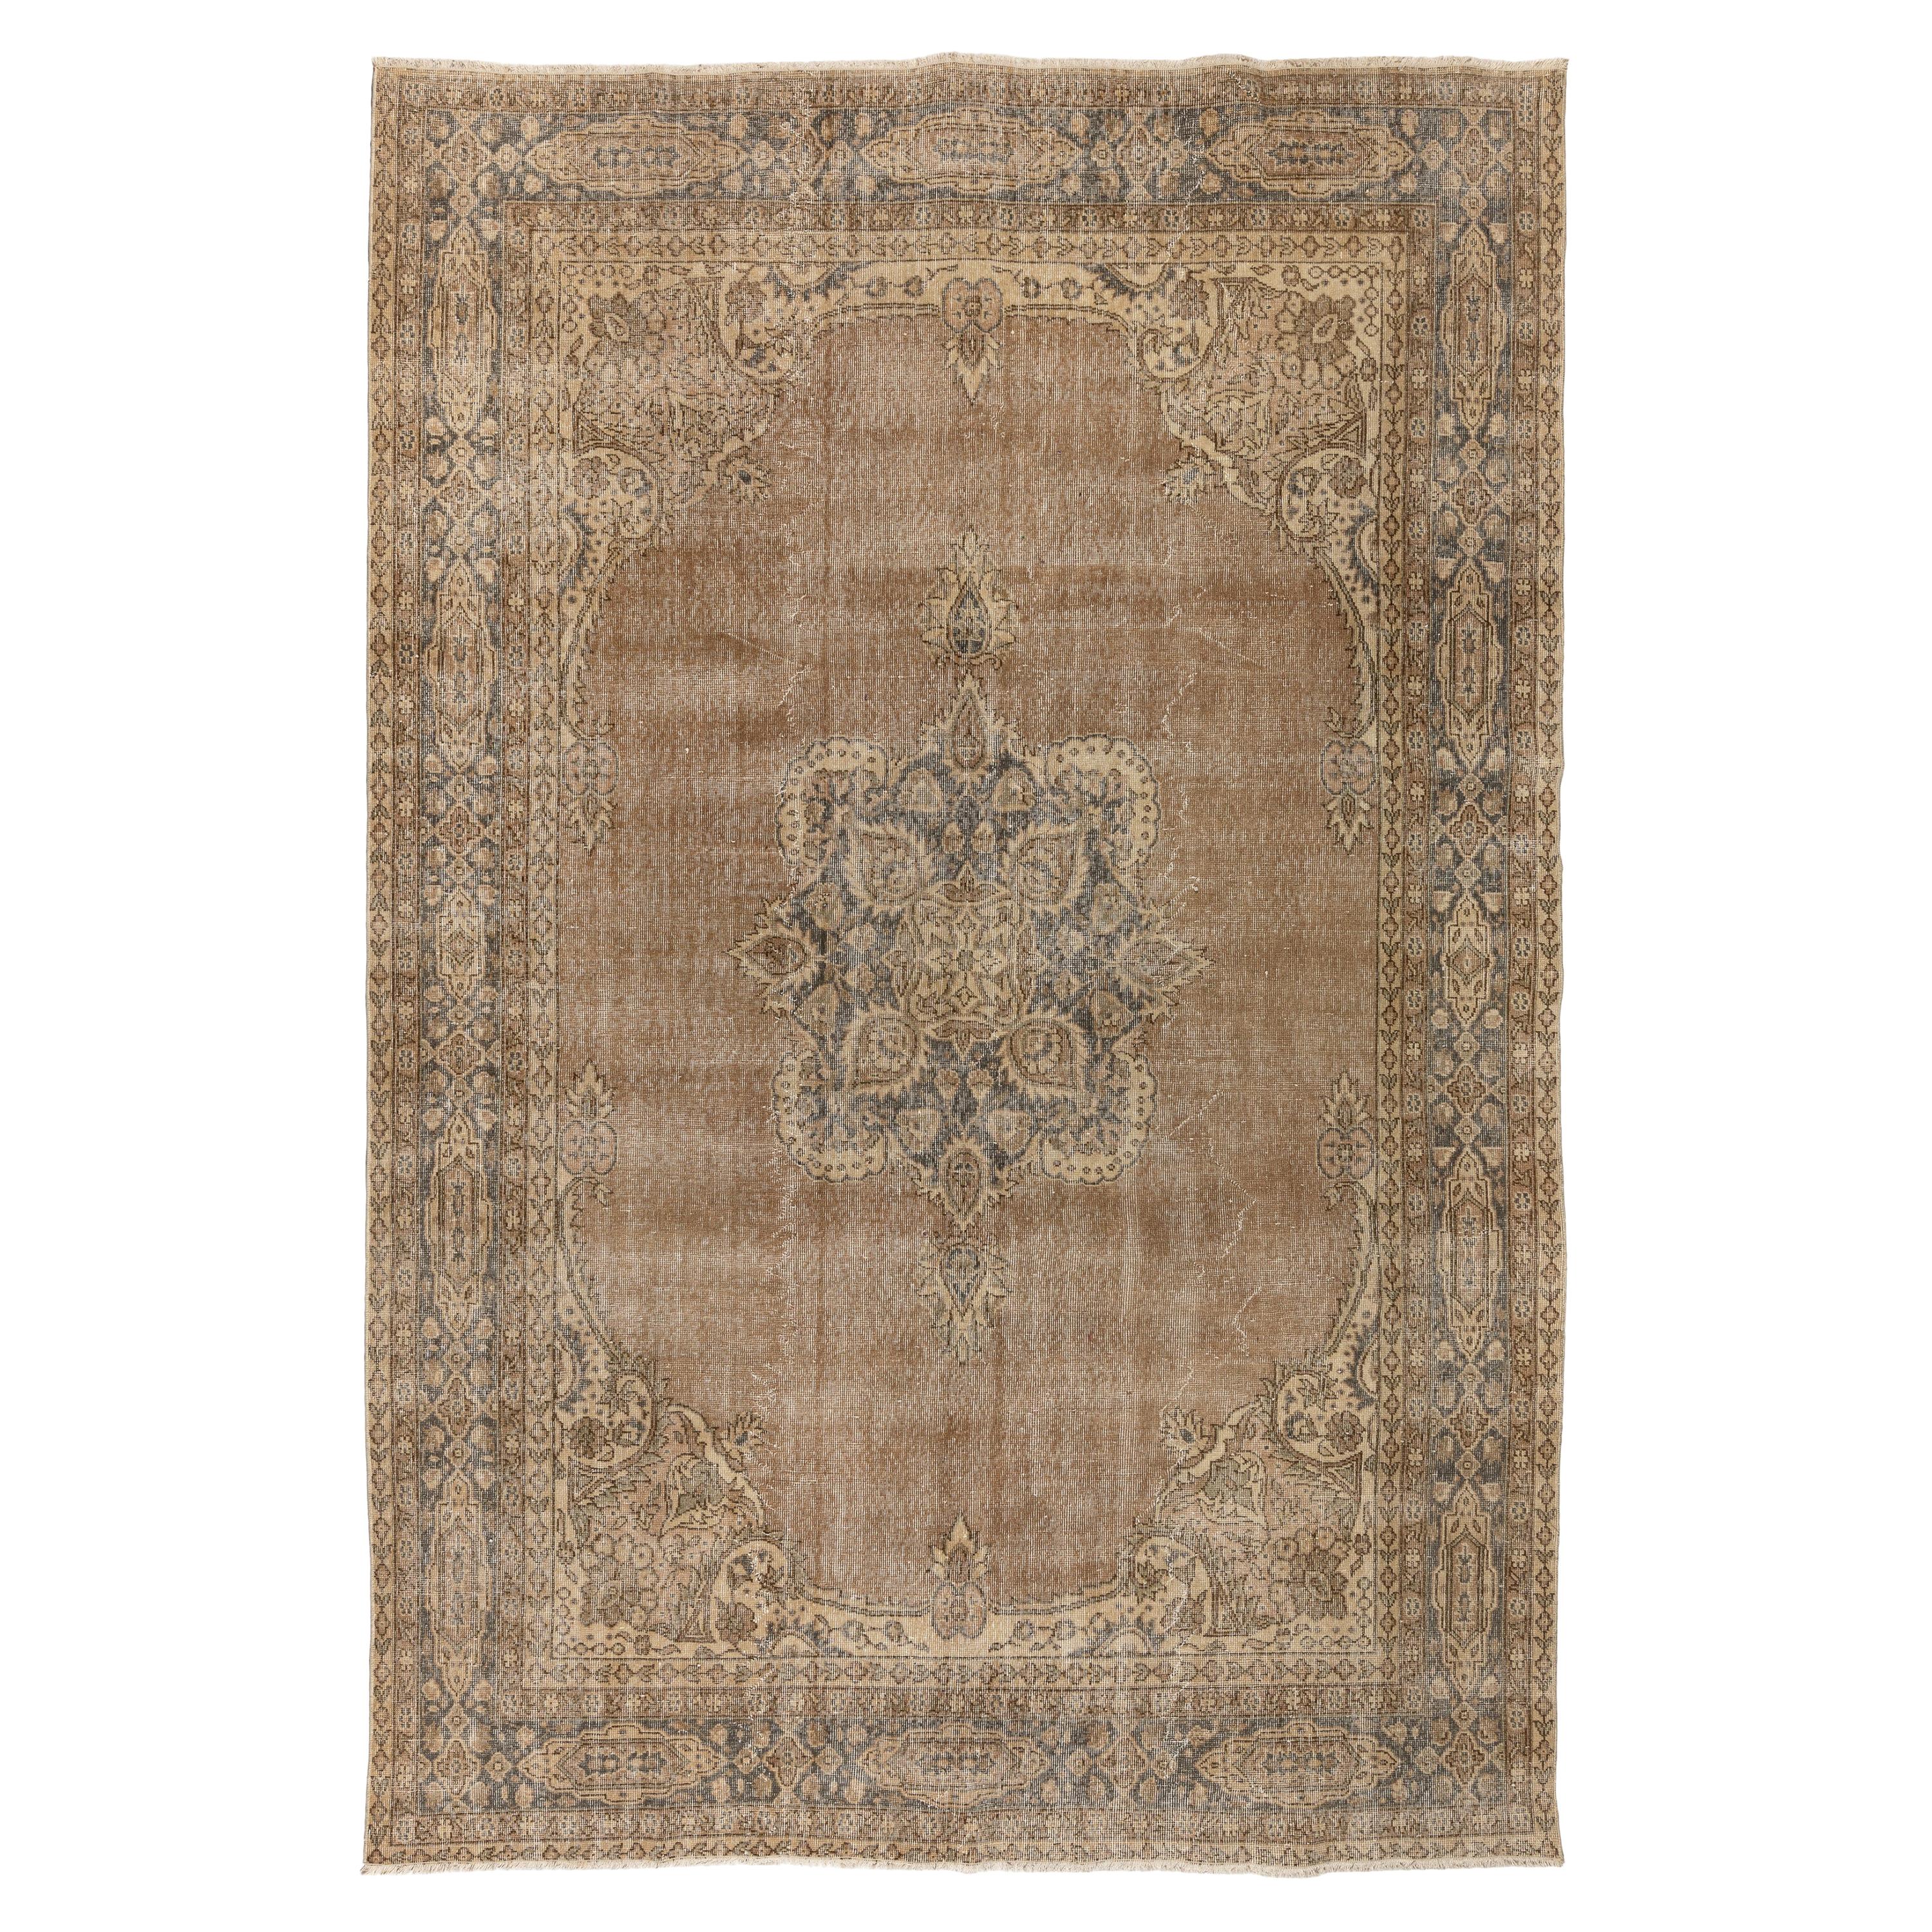 7.6x10.5 Ft Vintage Turkish Area Rug. Fine Wool Floor Covering.Oriental Carpet.  For Sale